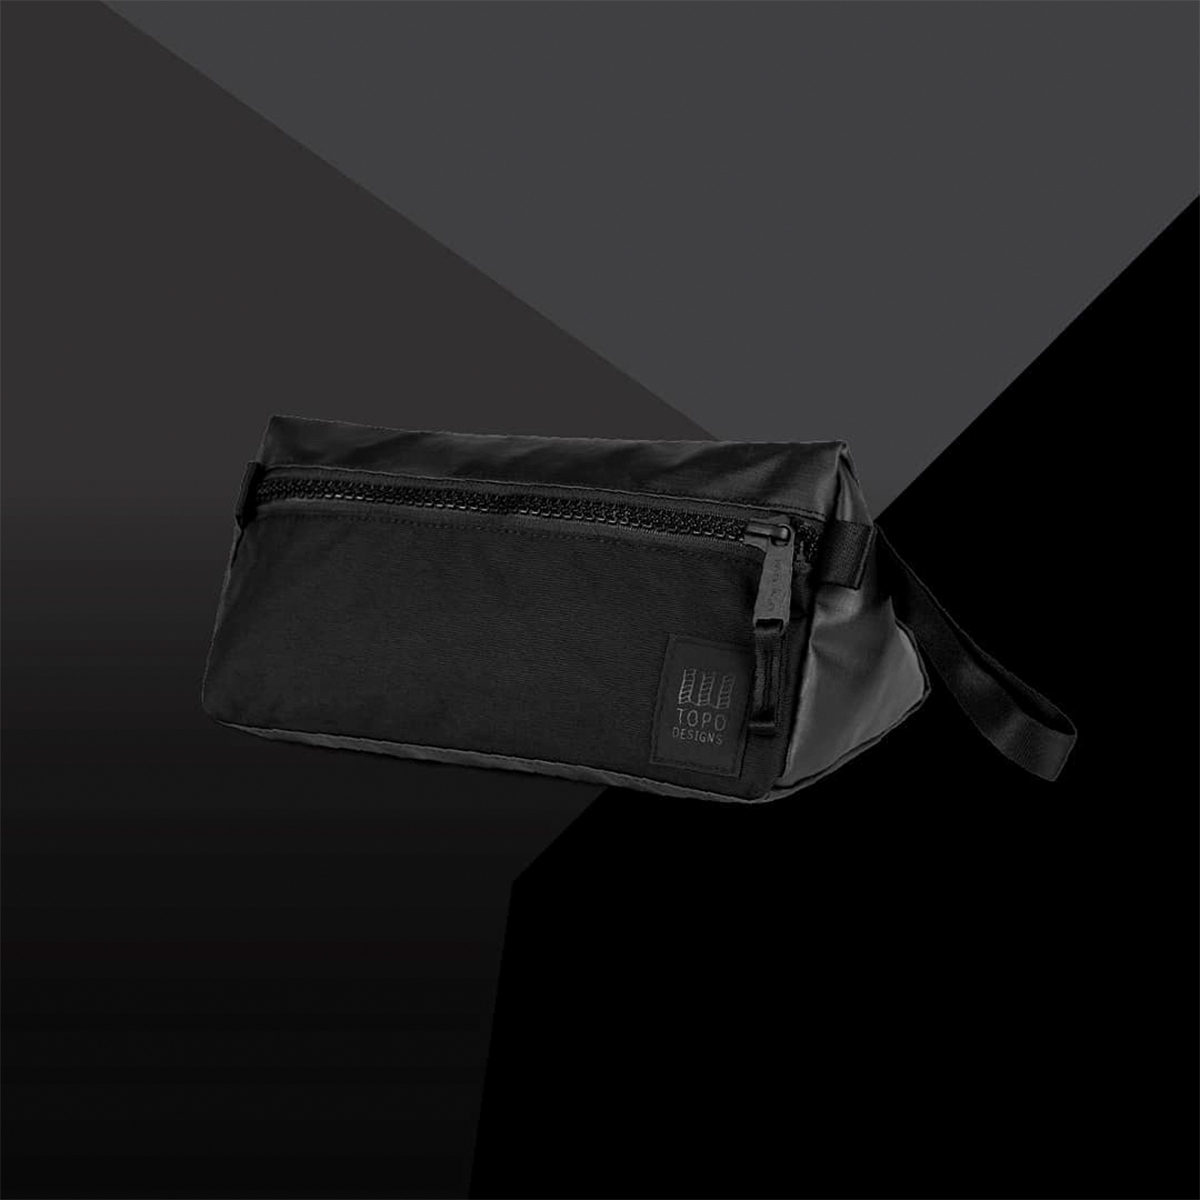 Topo Designs Dopp Kit Premium Black, toilettas speciaal ontworpen voor minimalistisch reizen